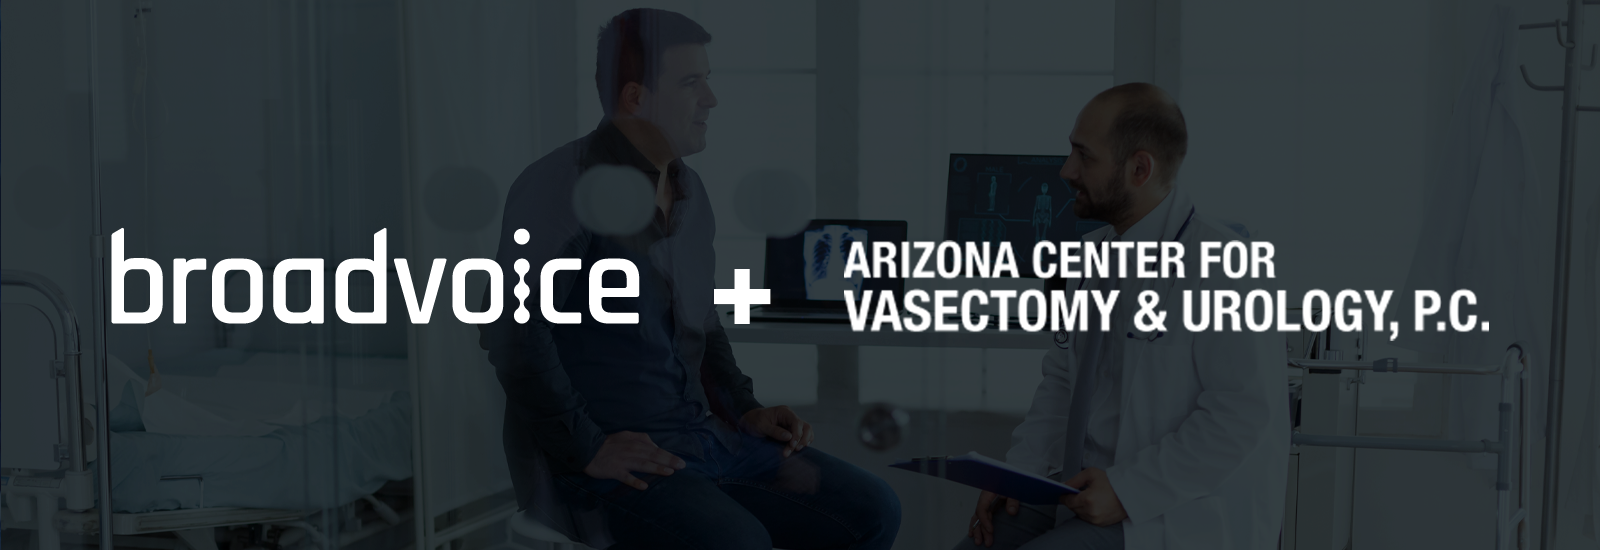 Arizona Center for Vasectomy & Urology